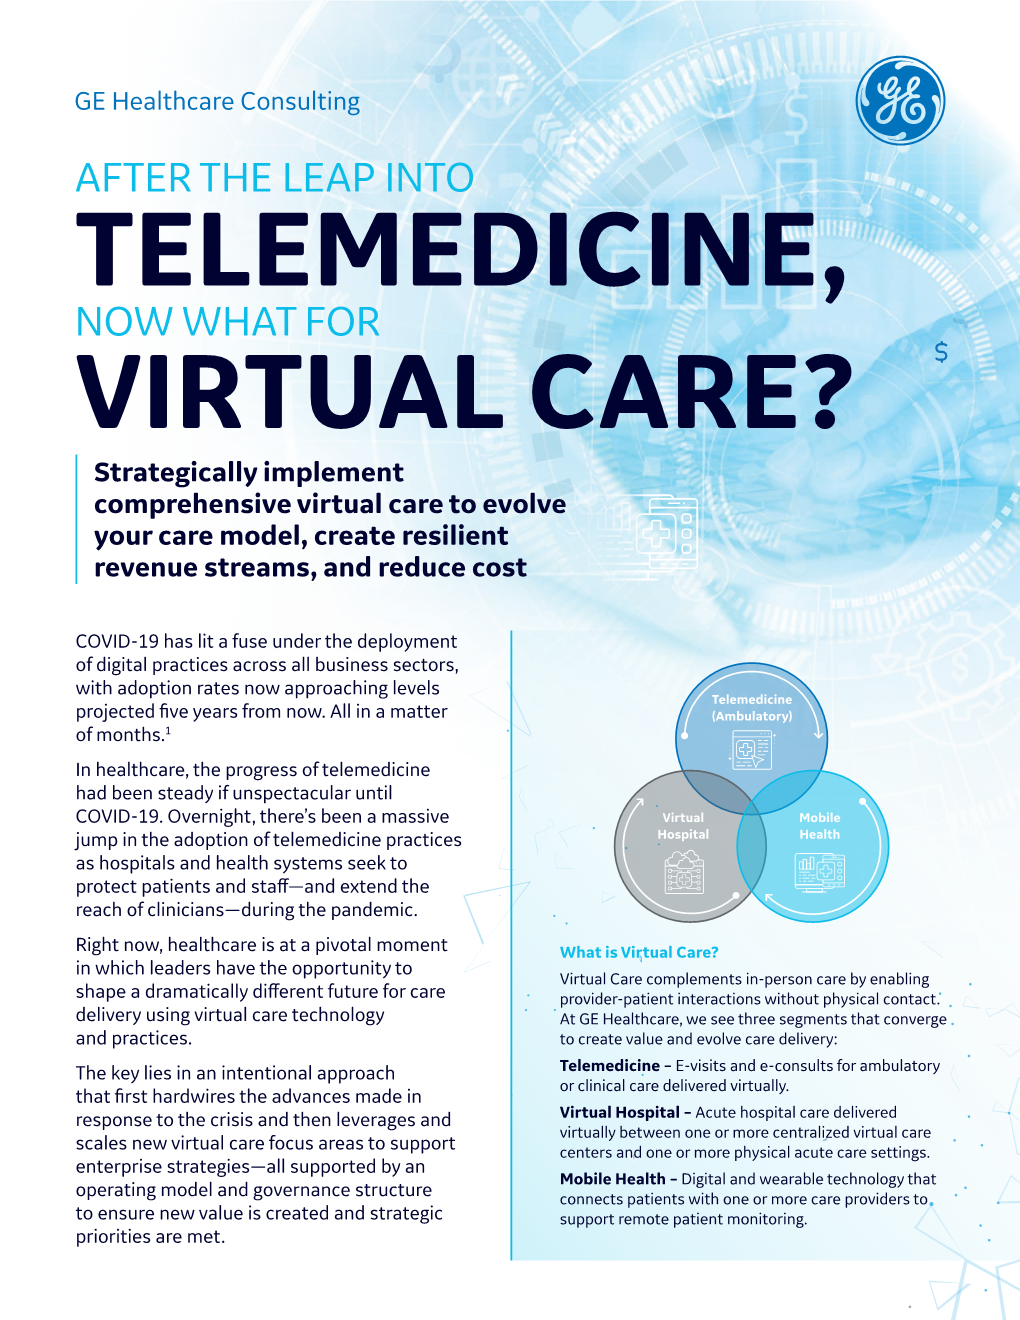 Telemedicine, Virtual Care?